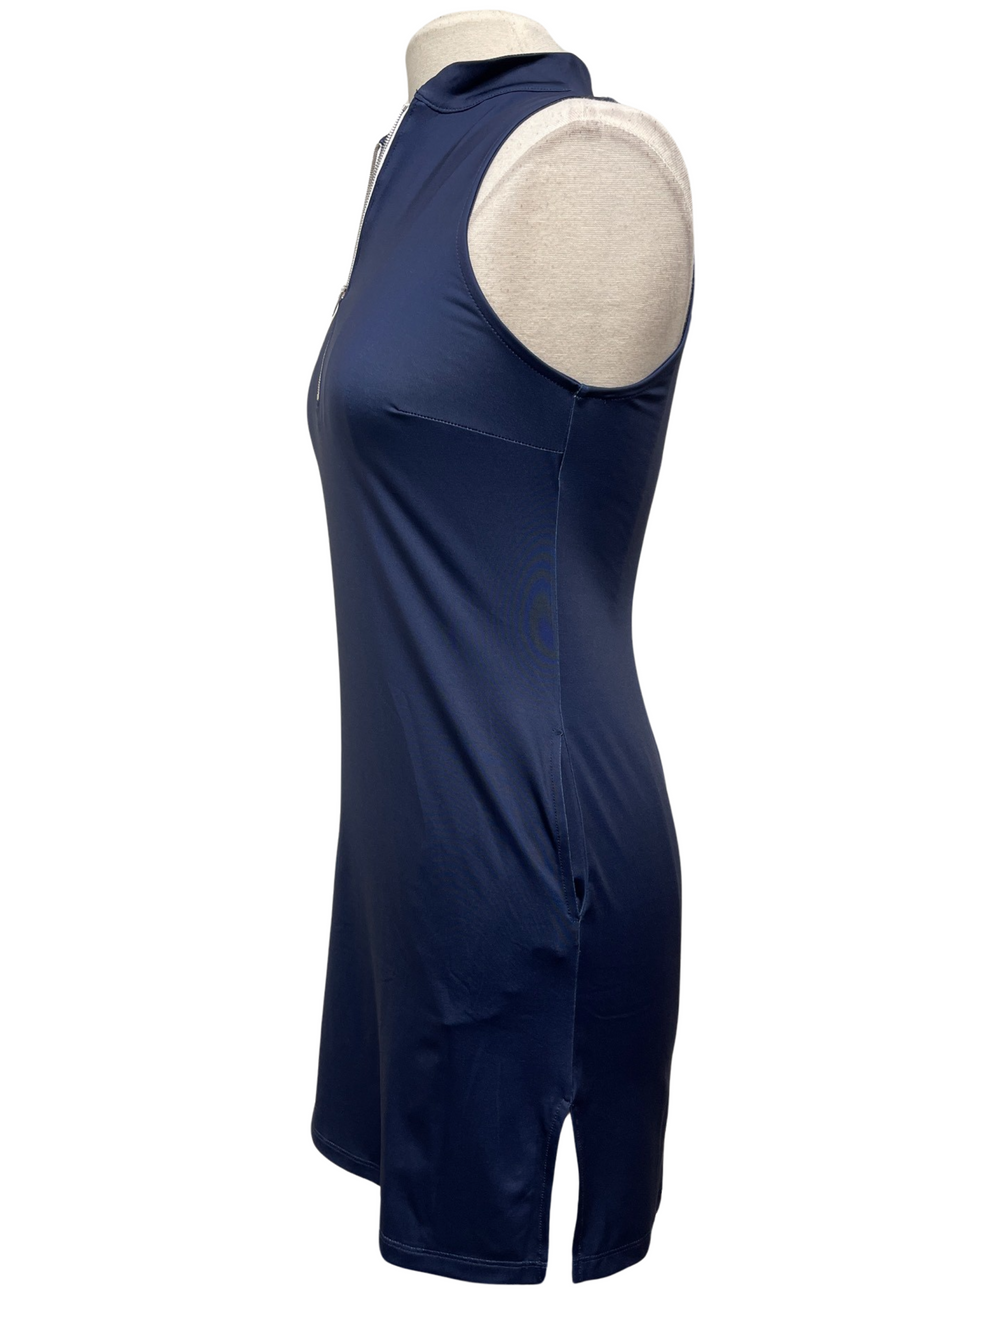 Amy Sport Frontline 2.0 Sleeveless Dress - Navy - X-Small - Skorzie